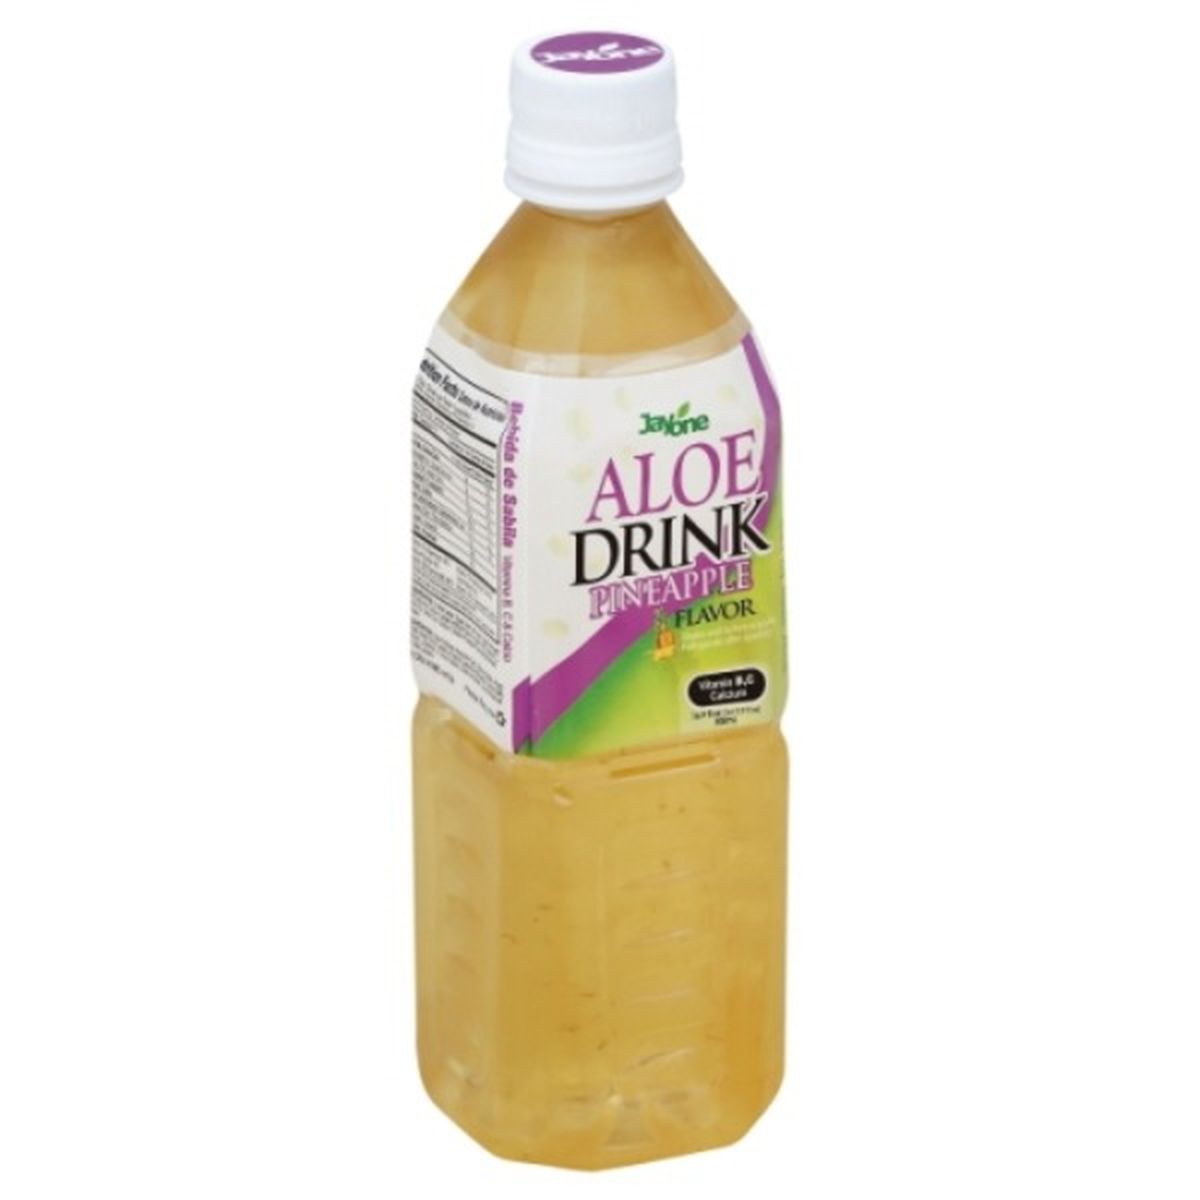 Calories in Jayone Aloe Drink, Pineapple Flavor